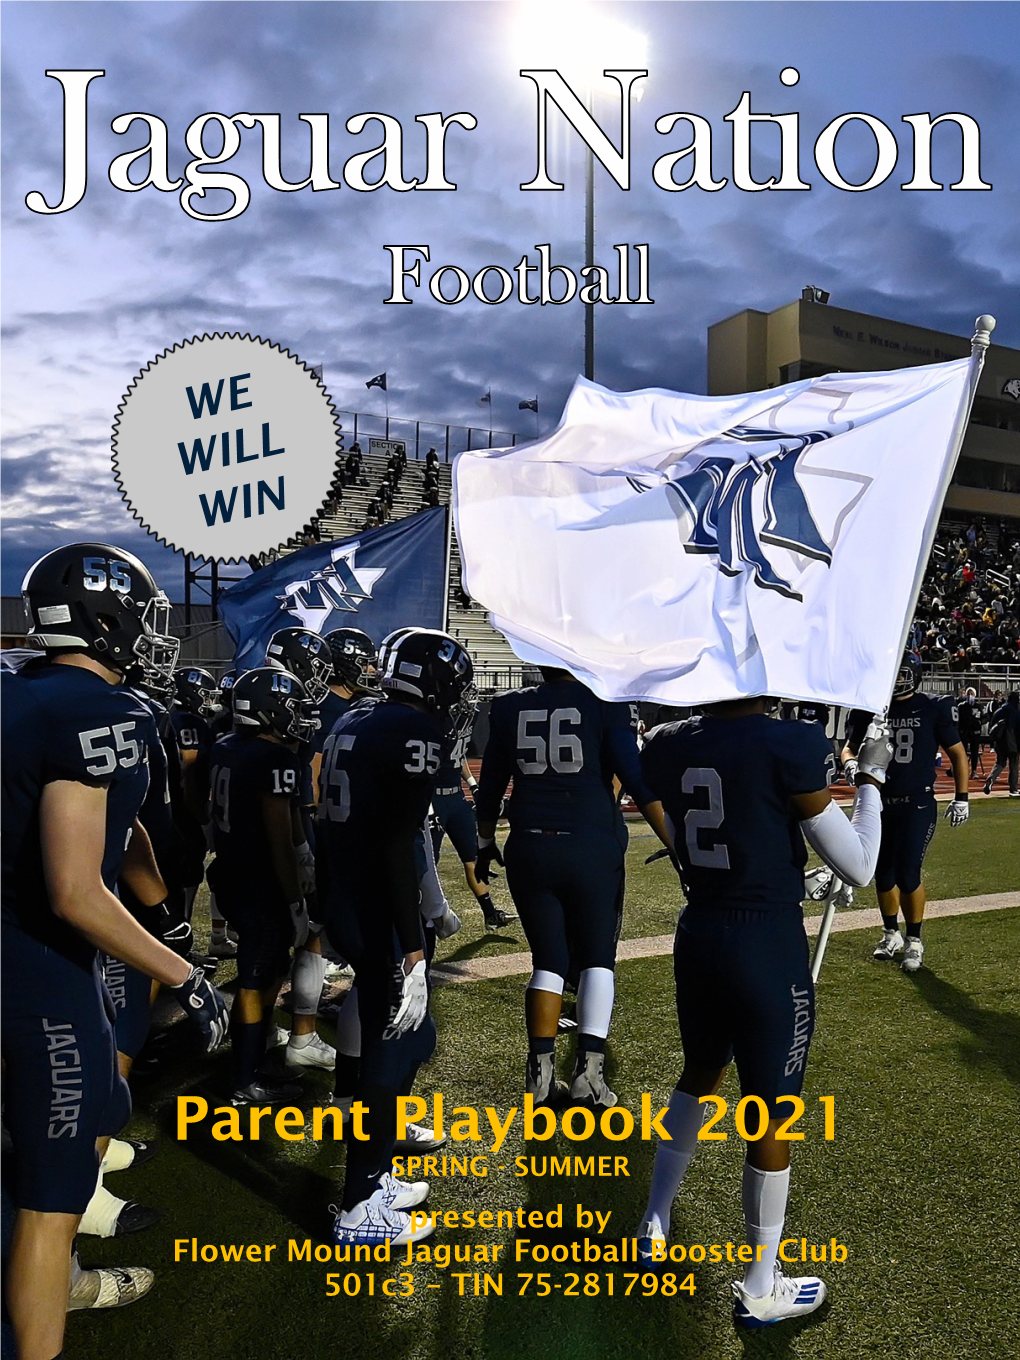 Parent Playbook 2021 SPRING - SUMMER Presented by Flower Mound Jaguar Football Booster Club 501C3 – TIN 75-2817984